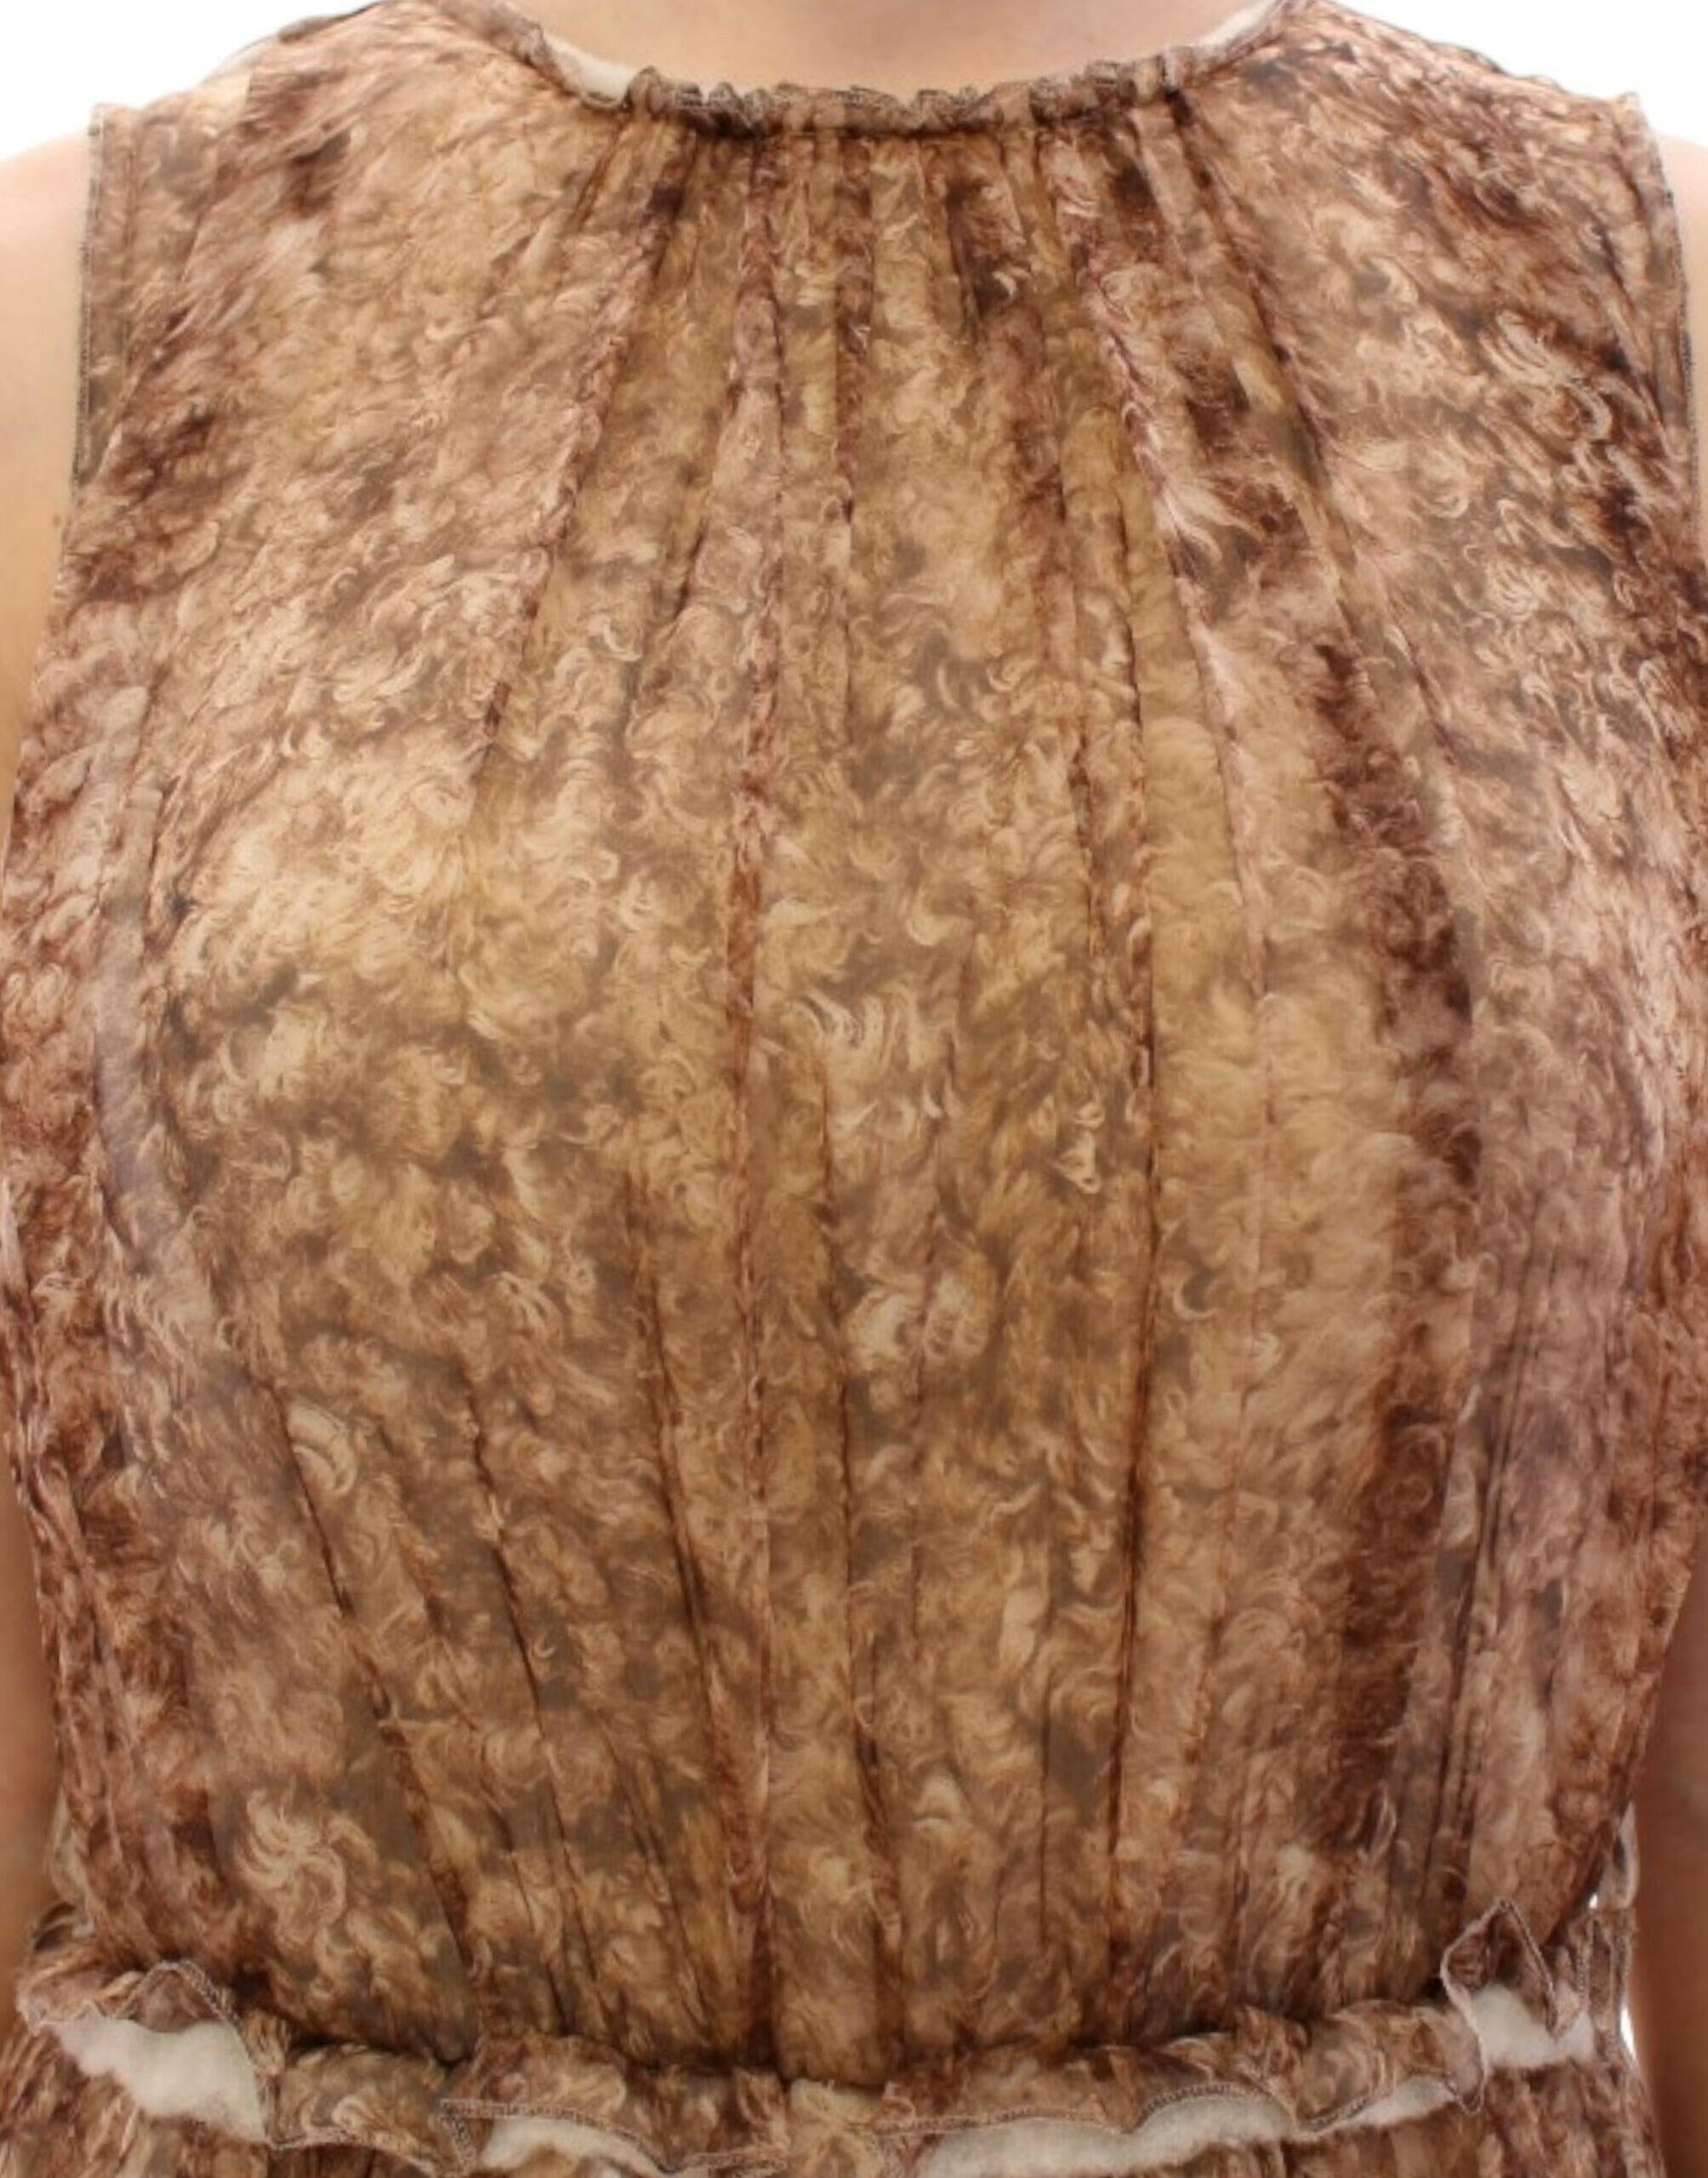 Dolce & Gabbana Brown sleeveless silk dress